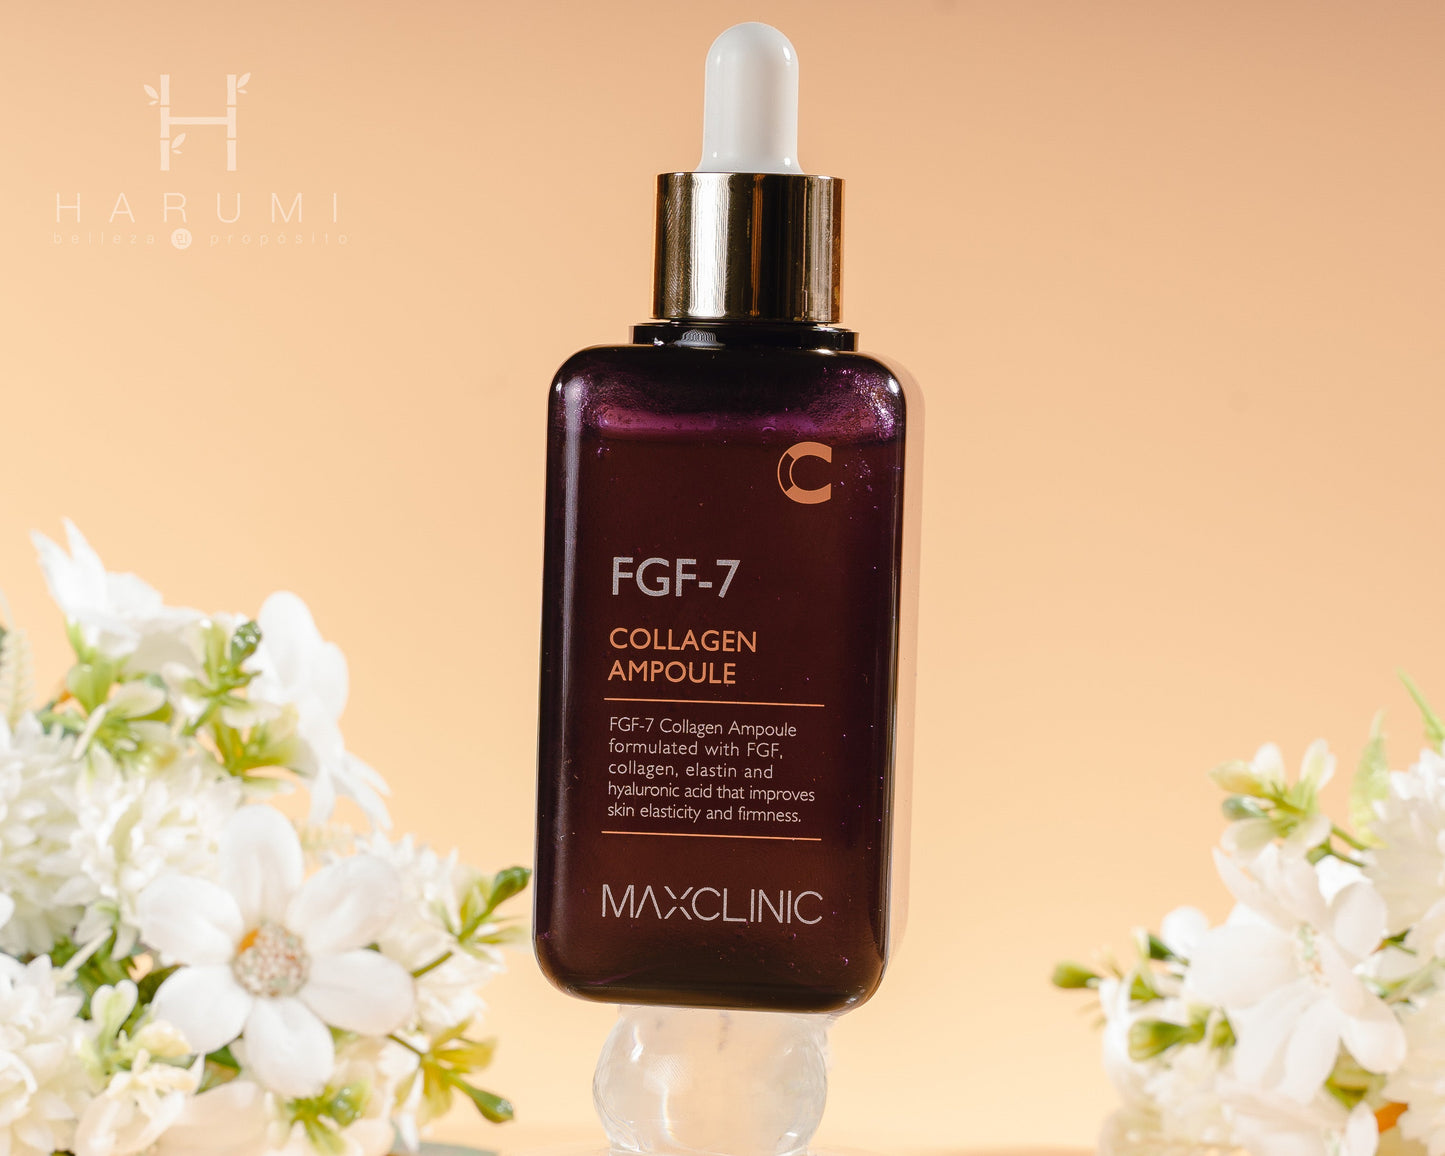 Maxclinic Fgf-7 Collagen Ampoule Skincare maquillaje productos de belleza coreanos en Colombia kbeauty